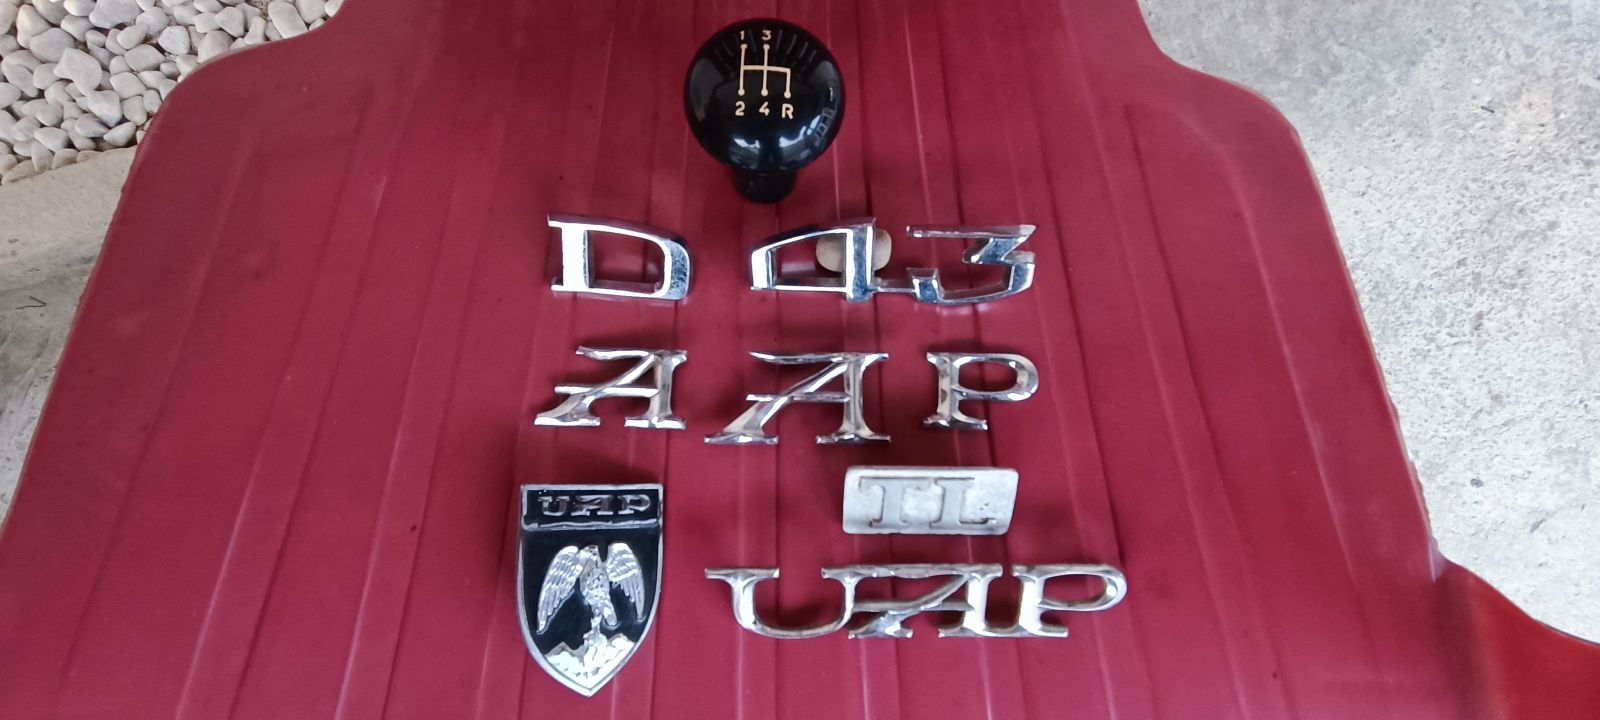 Emblema originala UAP are peste 40 de ani si piese dacia 1300